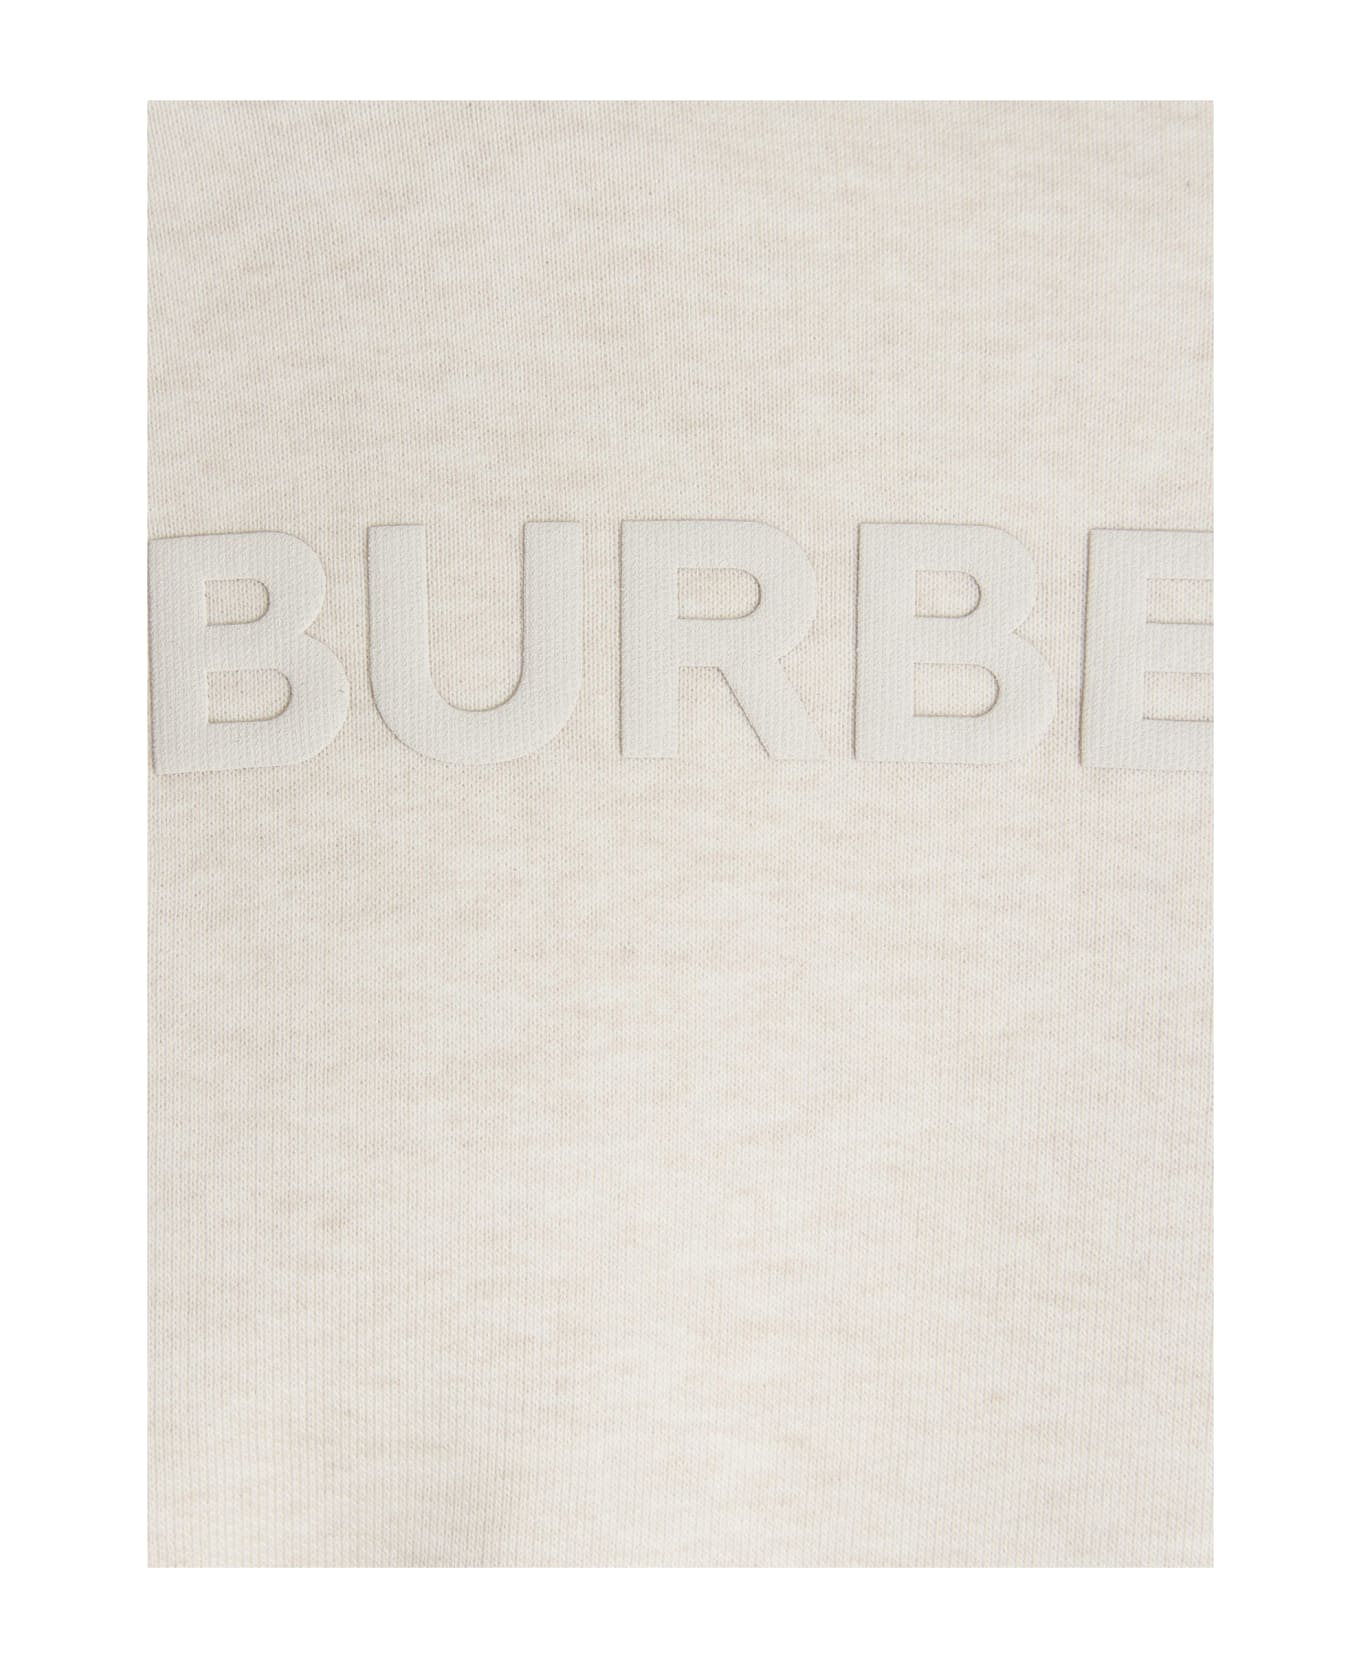 Burberry Logo Print Sweatshirt - White